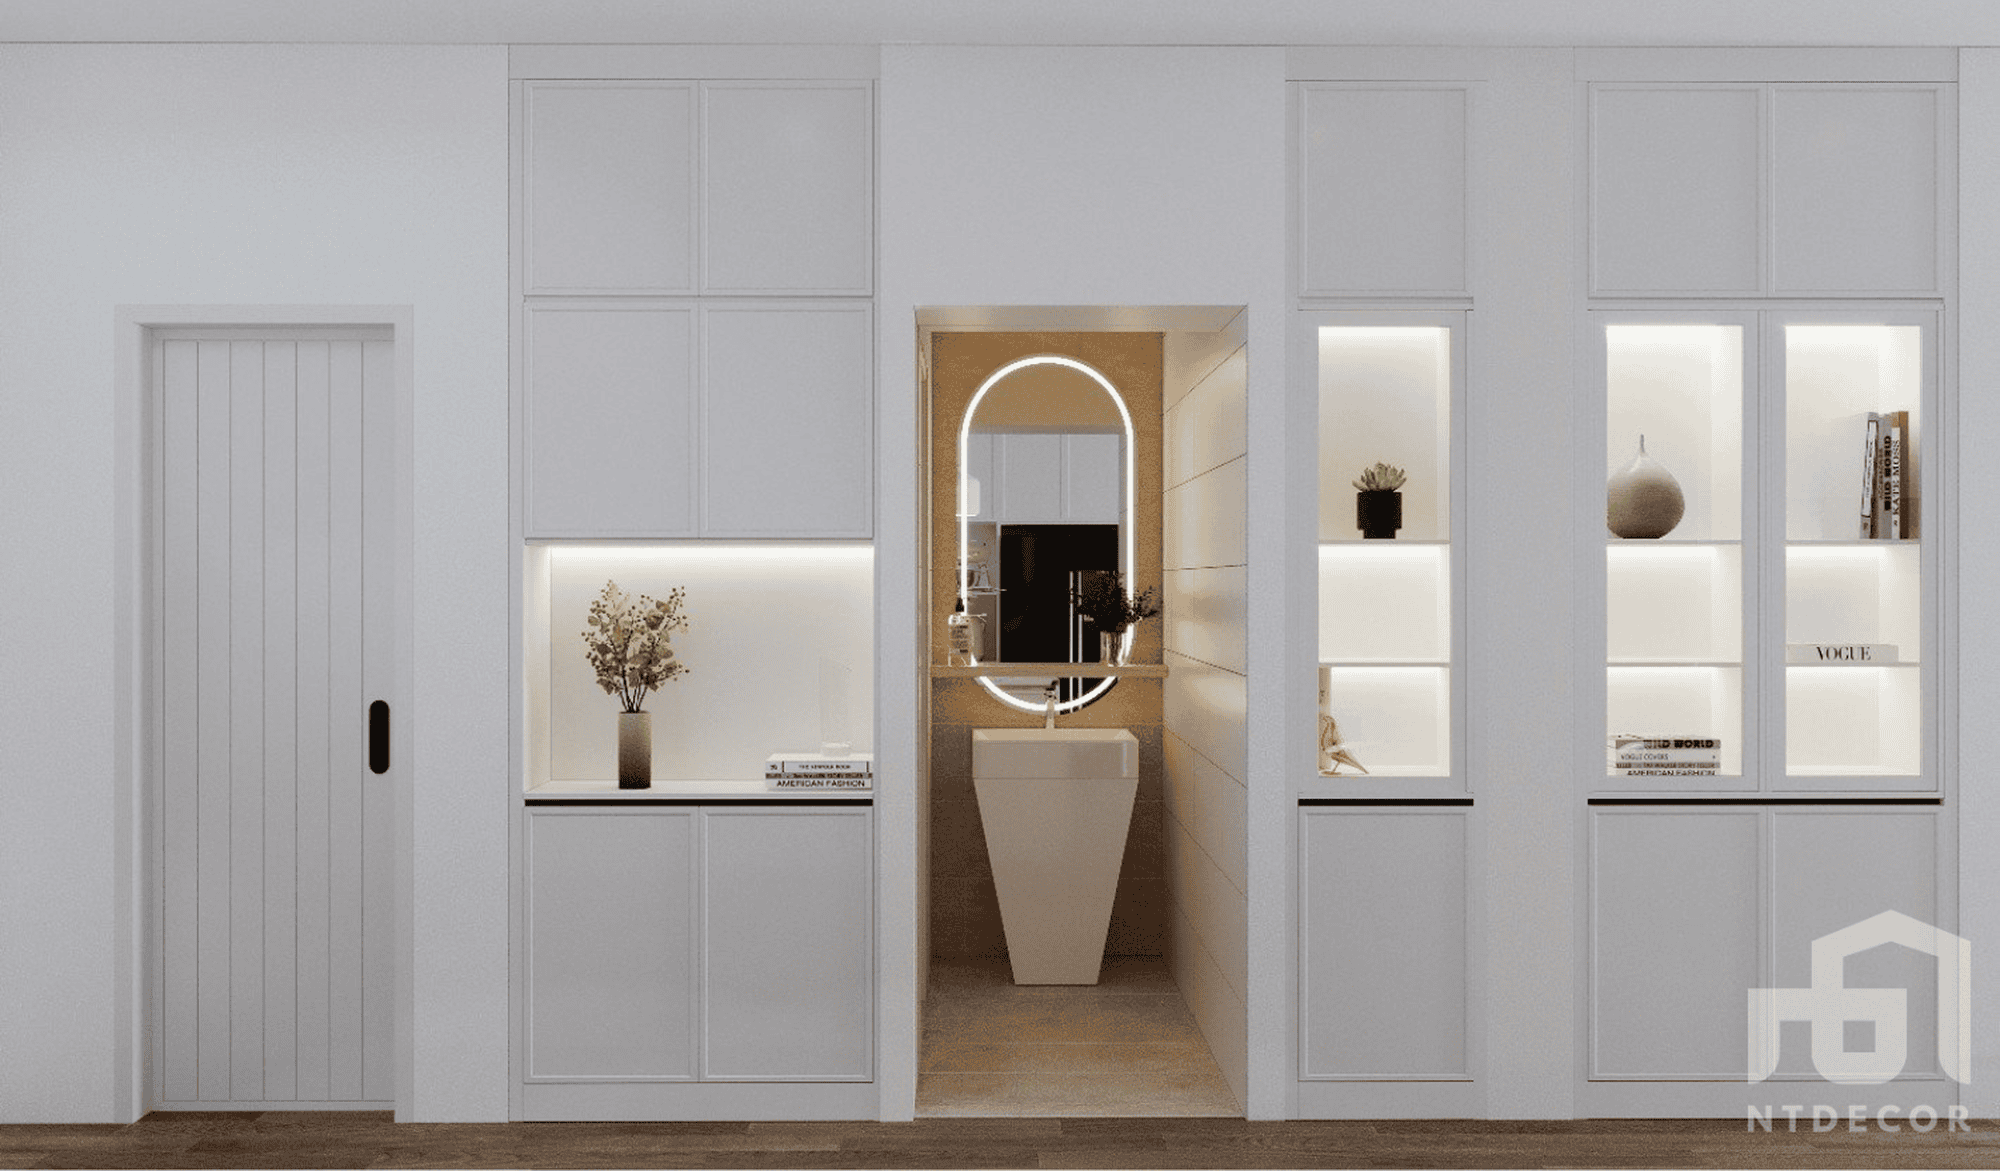 Living Room Reality Design of Daniel's House Interior Design Modern Style | NTDecor